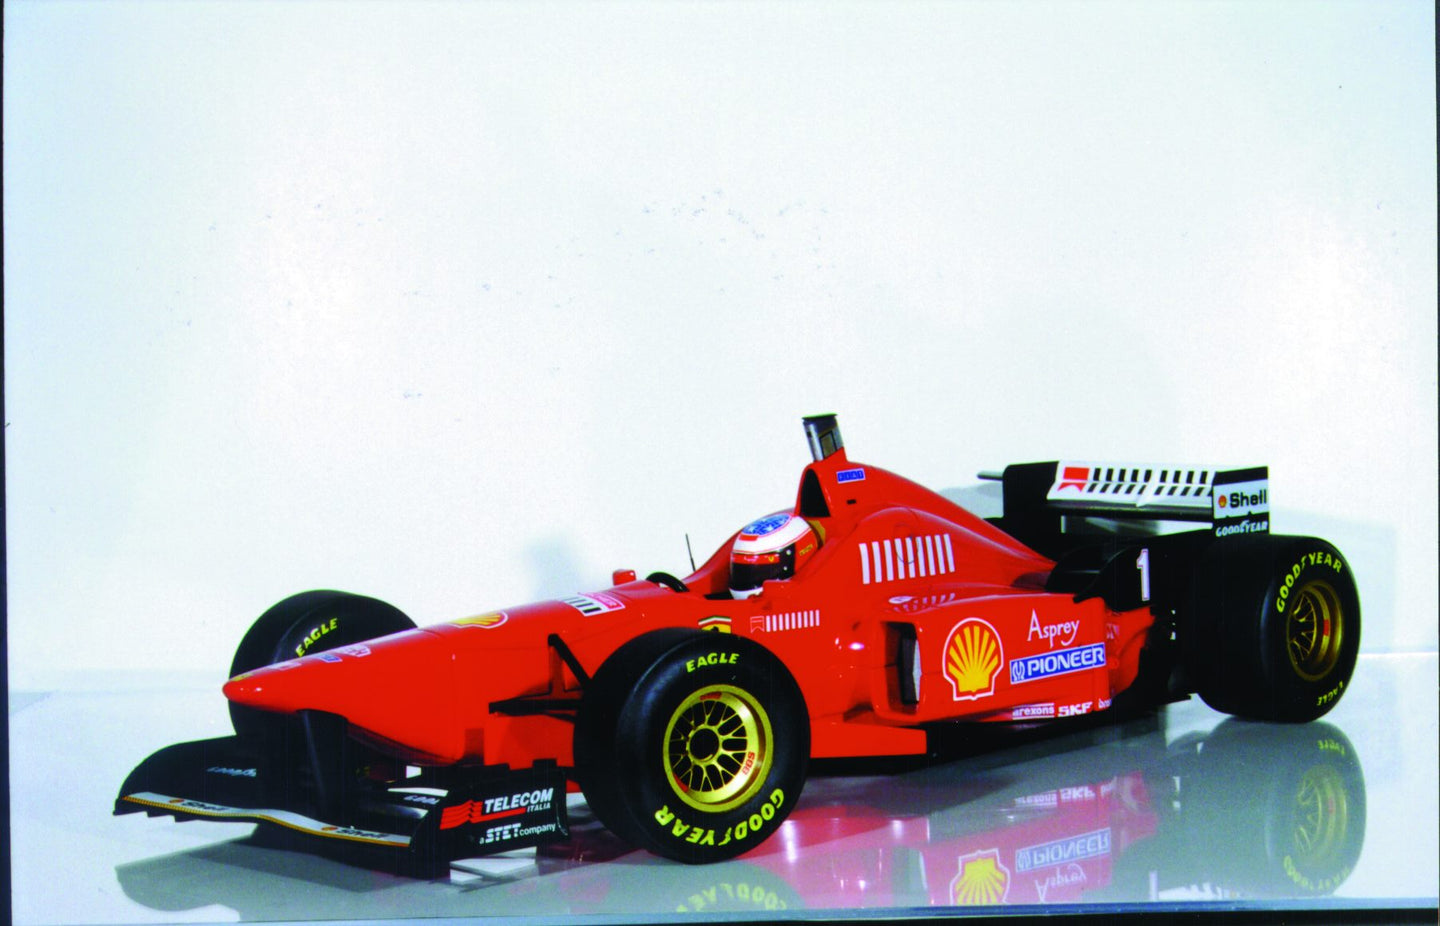 1:18 Minichamps Ferrari F310 '96 #1 Schumacher